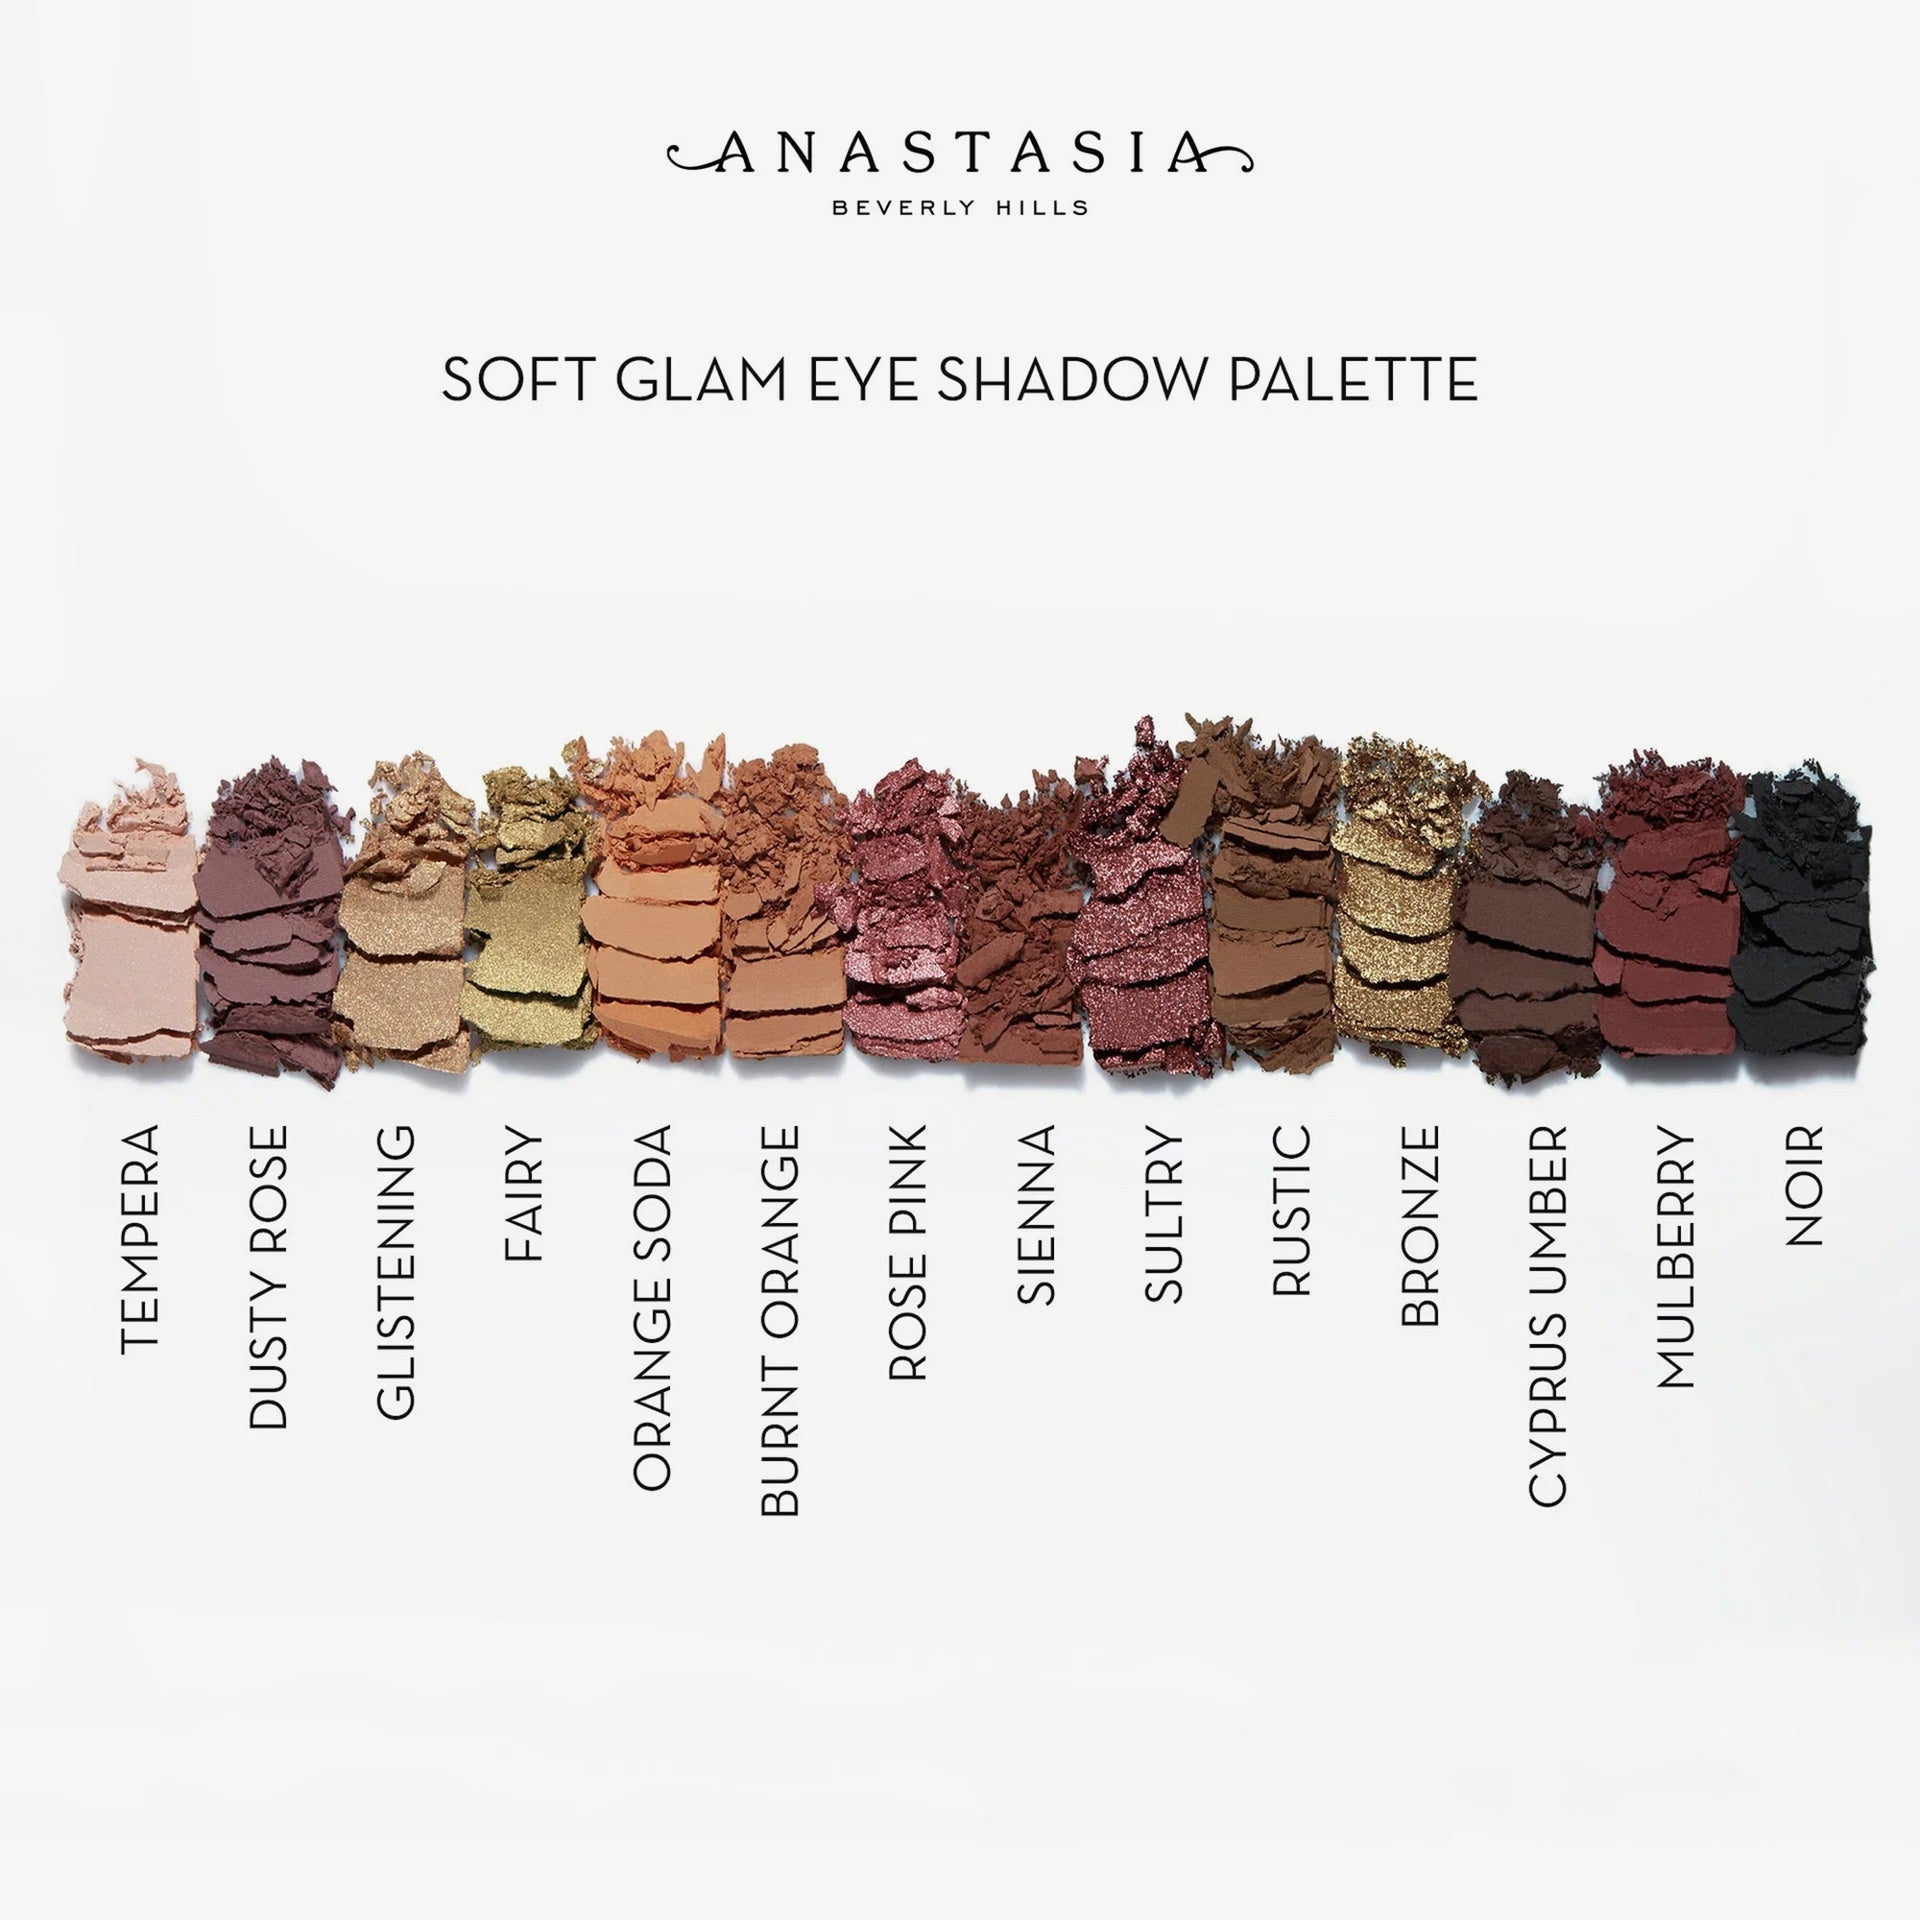 Soft Glam Eyeshadow Palette Swatches